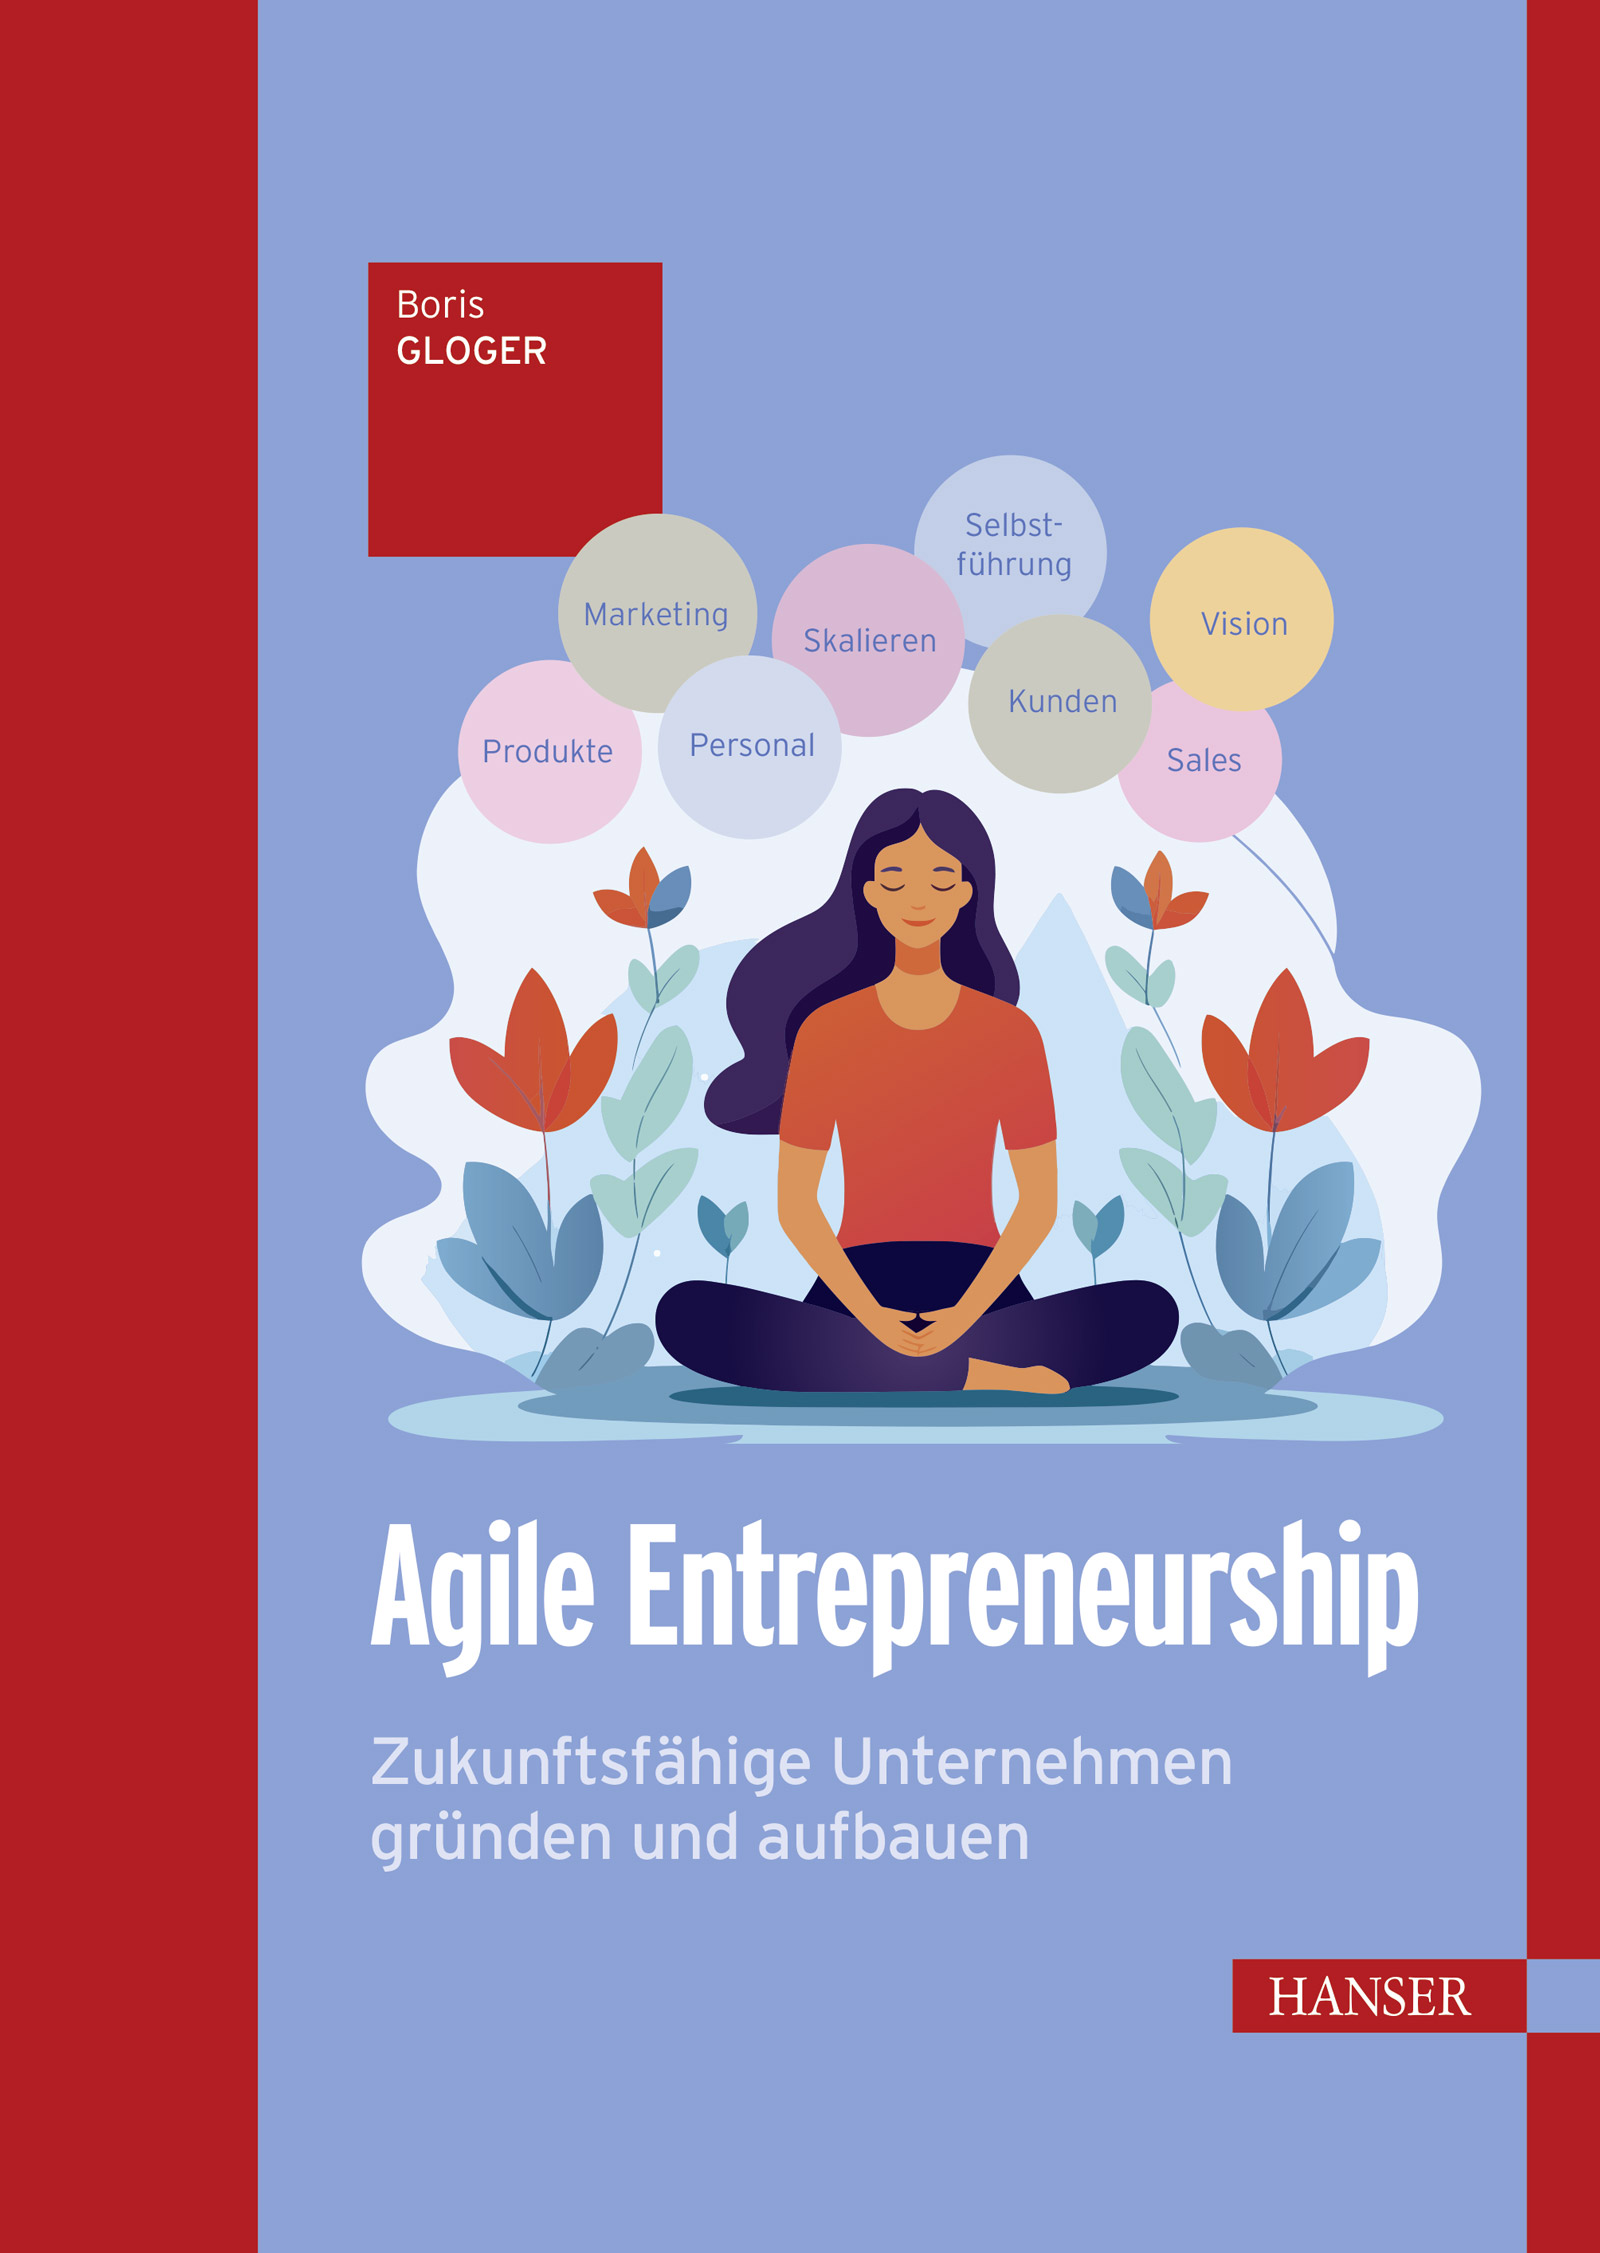 Boris Gloger: Agile Entrepreneurship (Hardcover, deutsch language, Hanser)